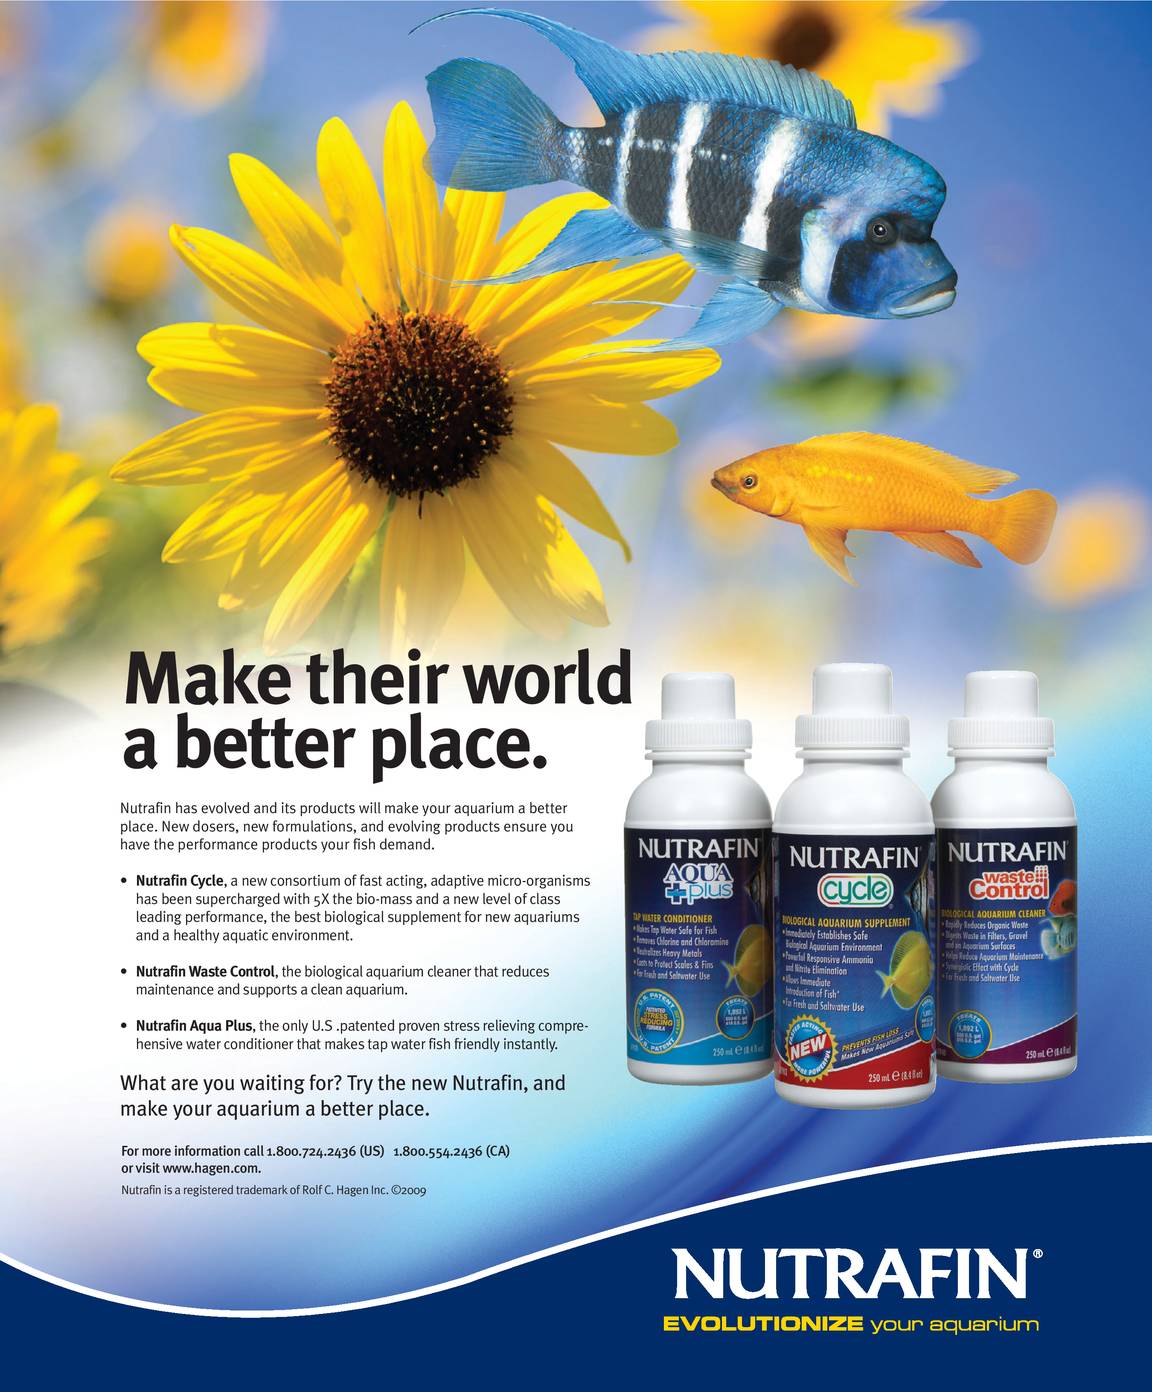 Nutrafin Waste Control - Biological Aquarium Cleaner